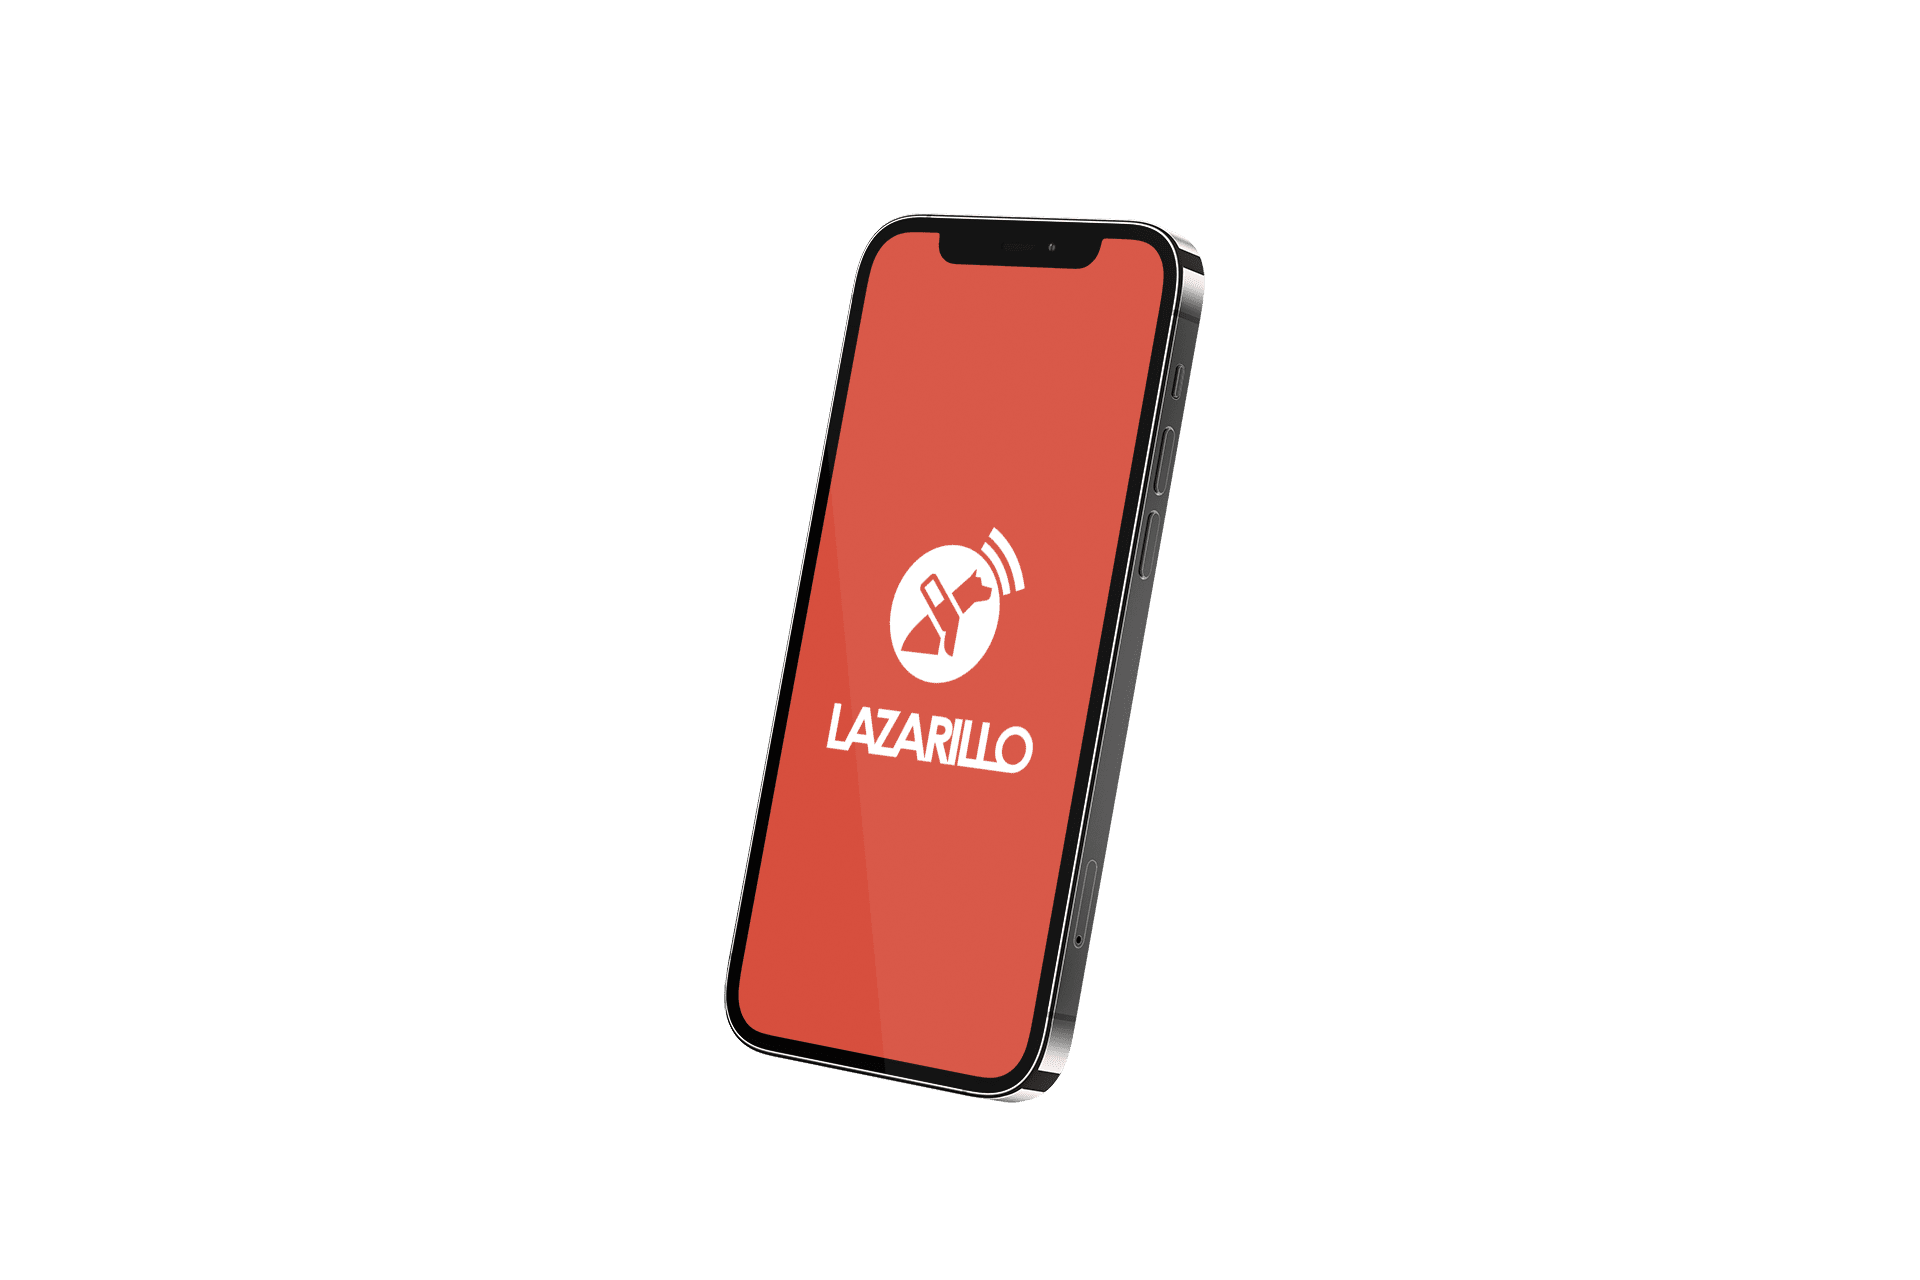 Mockup of the Lazarillo logo on a smartphone